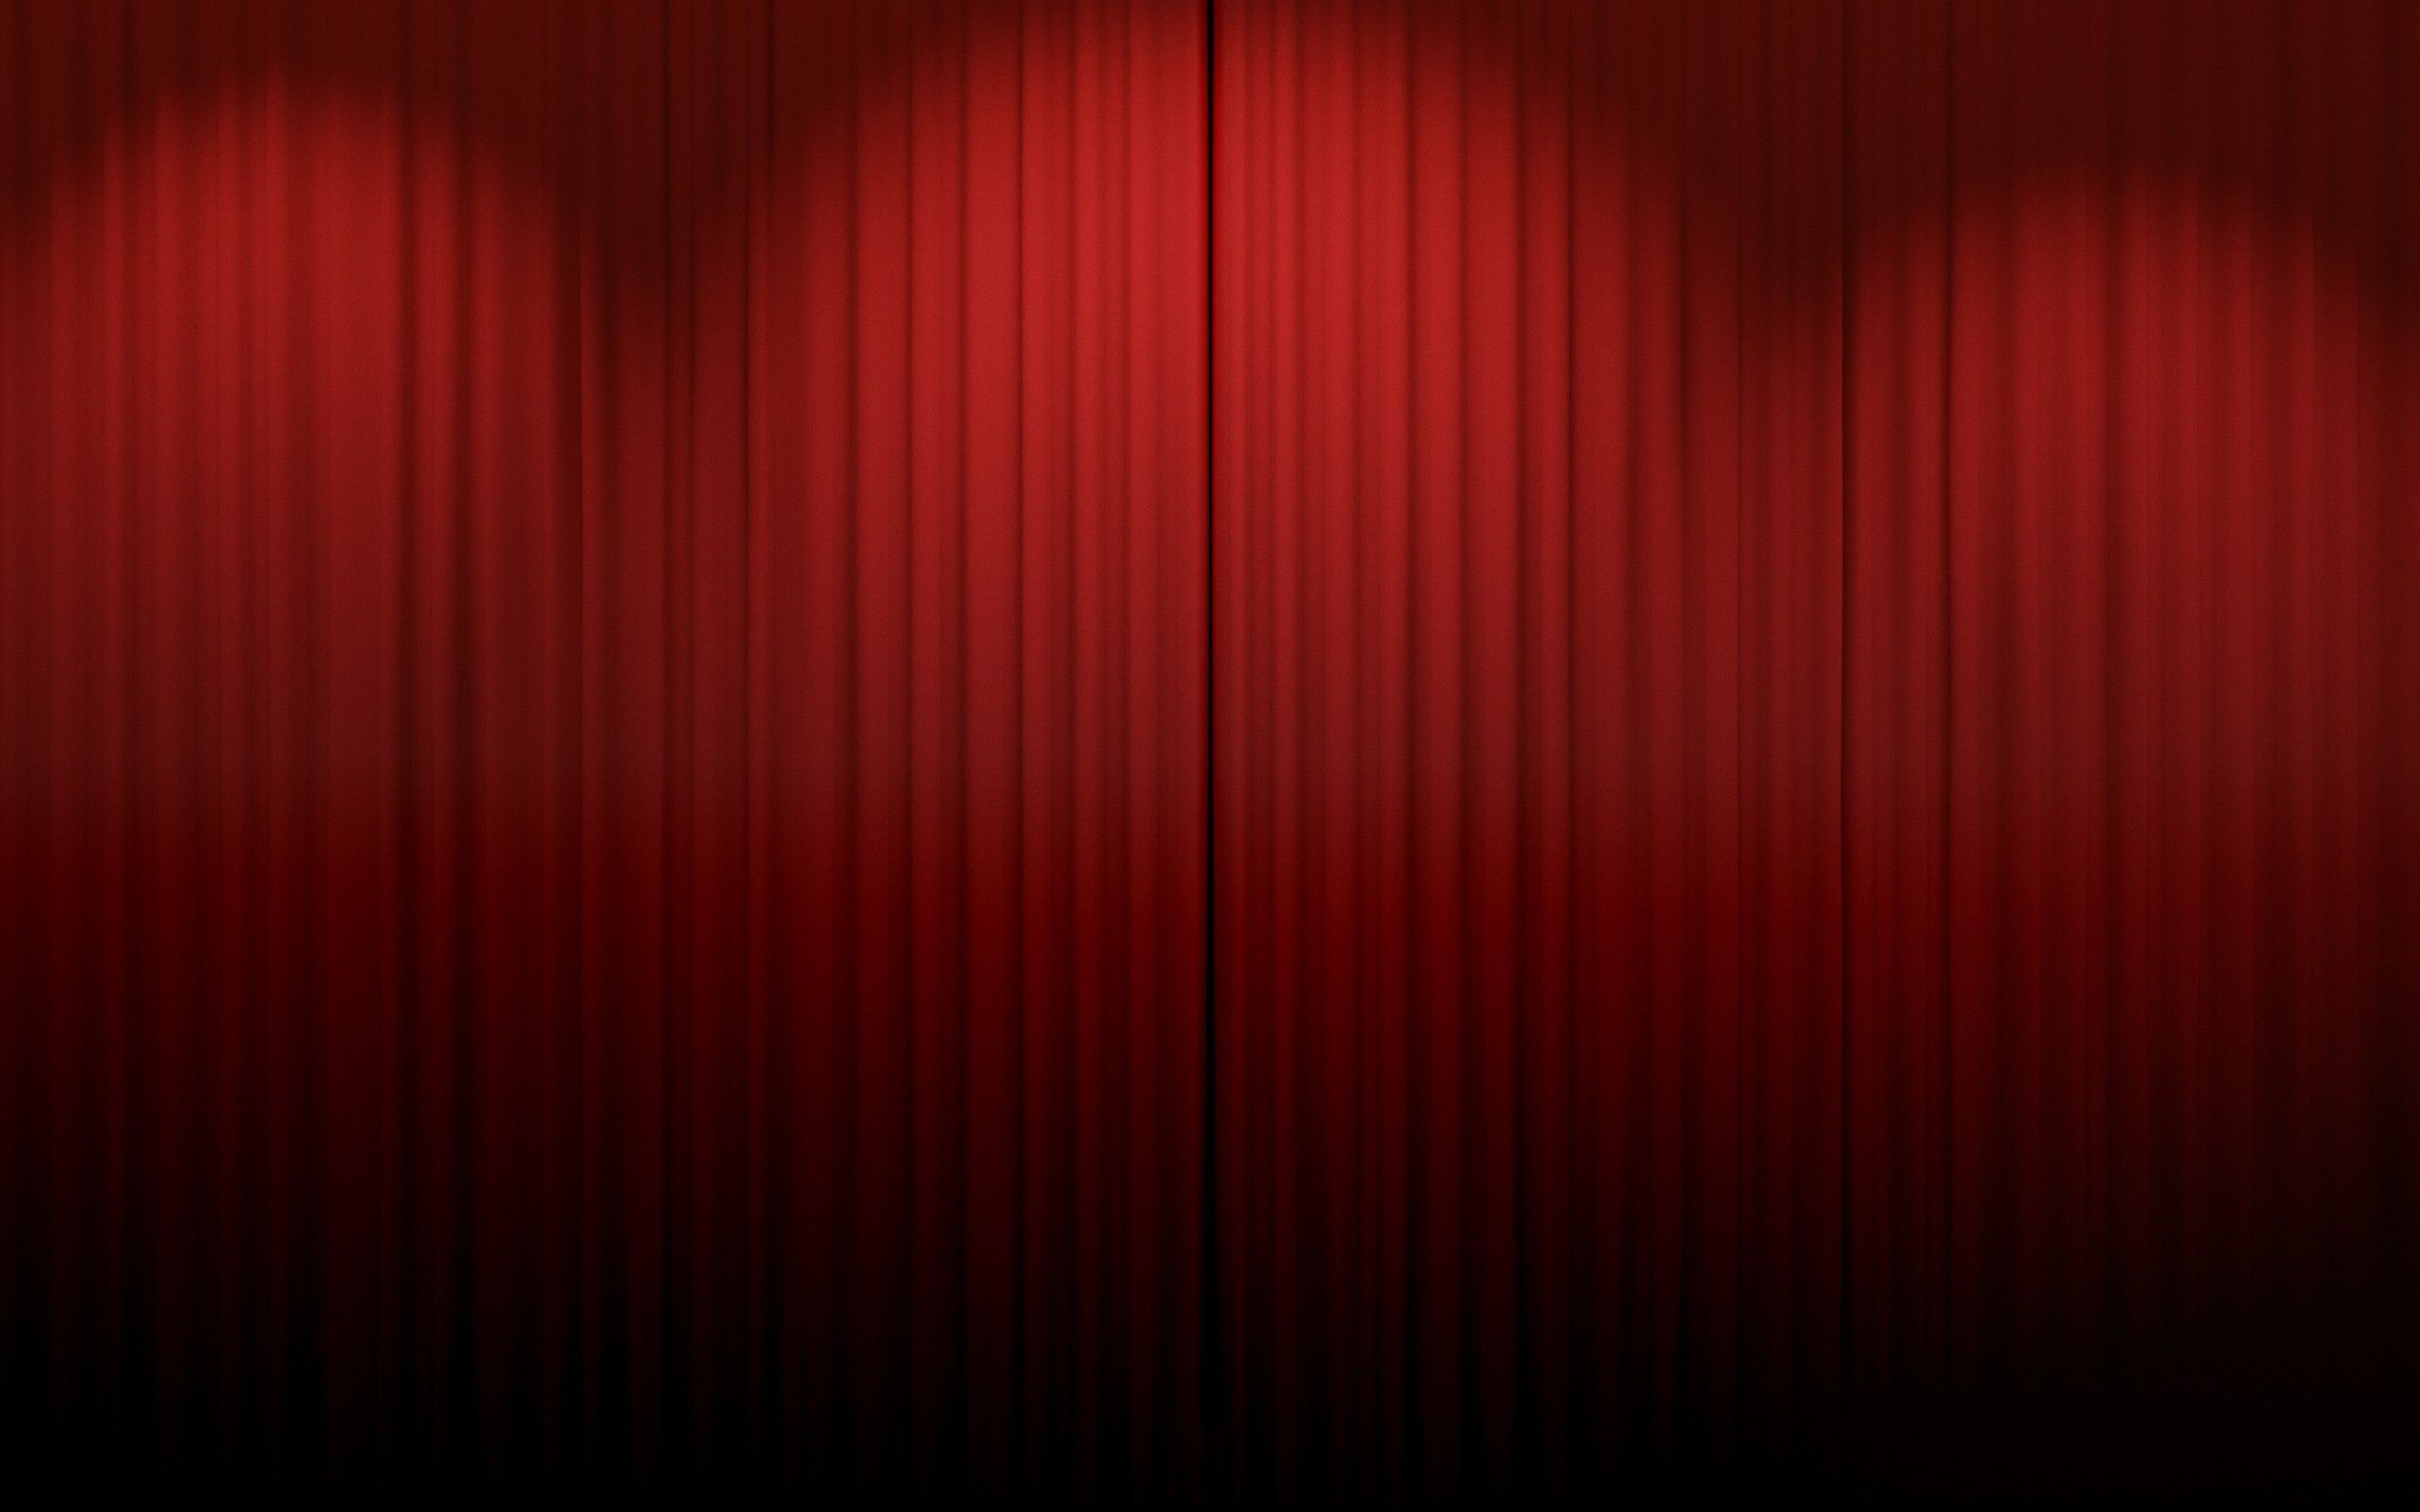 Curtains Wallpaper. Theatre Curtains Wallpaper, Curtains Wallpaper and Curtains PowerPoint Background HD